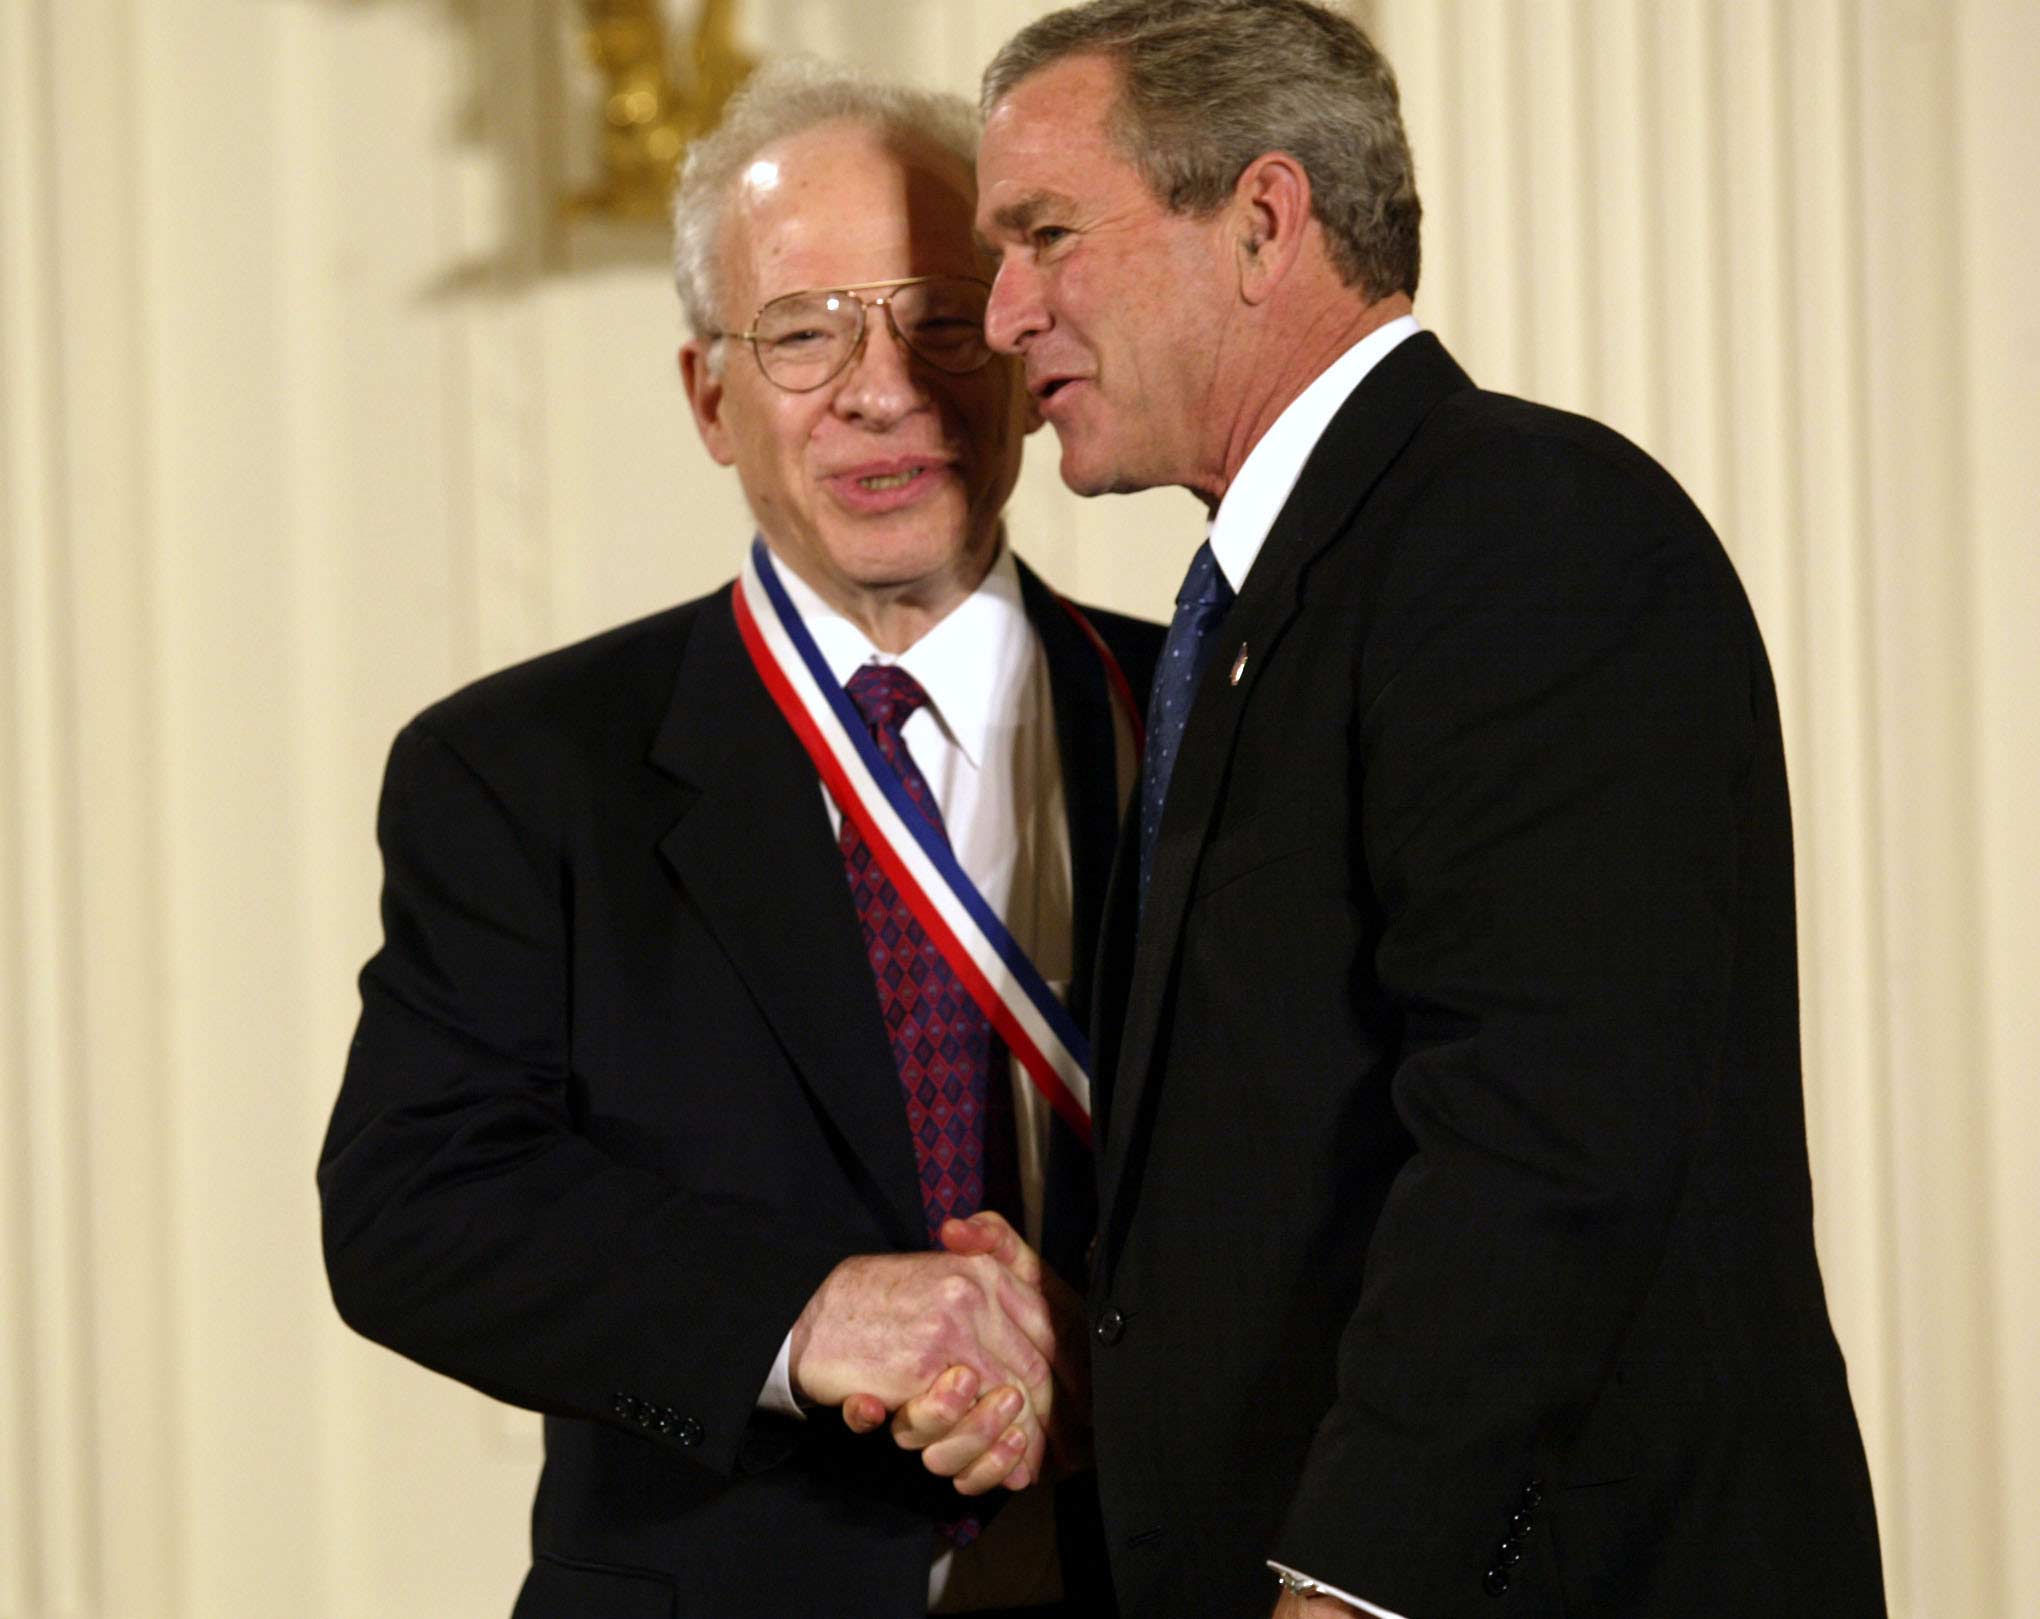 Photo of awardee and President Bush